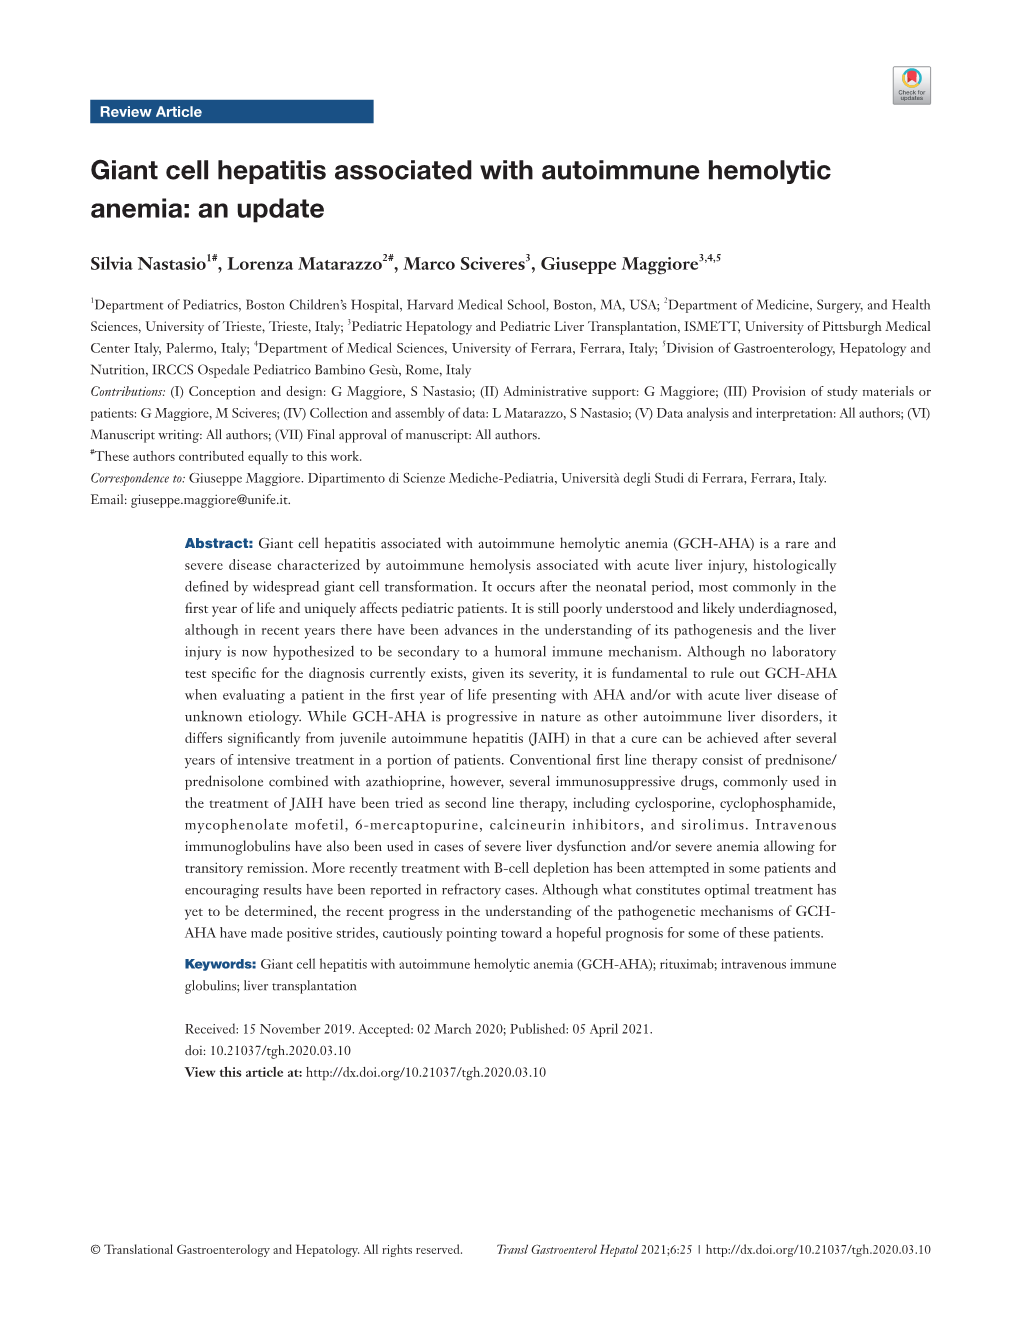 Giant Cell Hepatitis Associated with Autoimmune Hemolytic Anemia: an Update